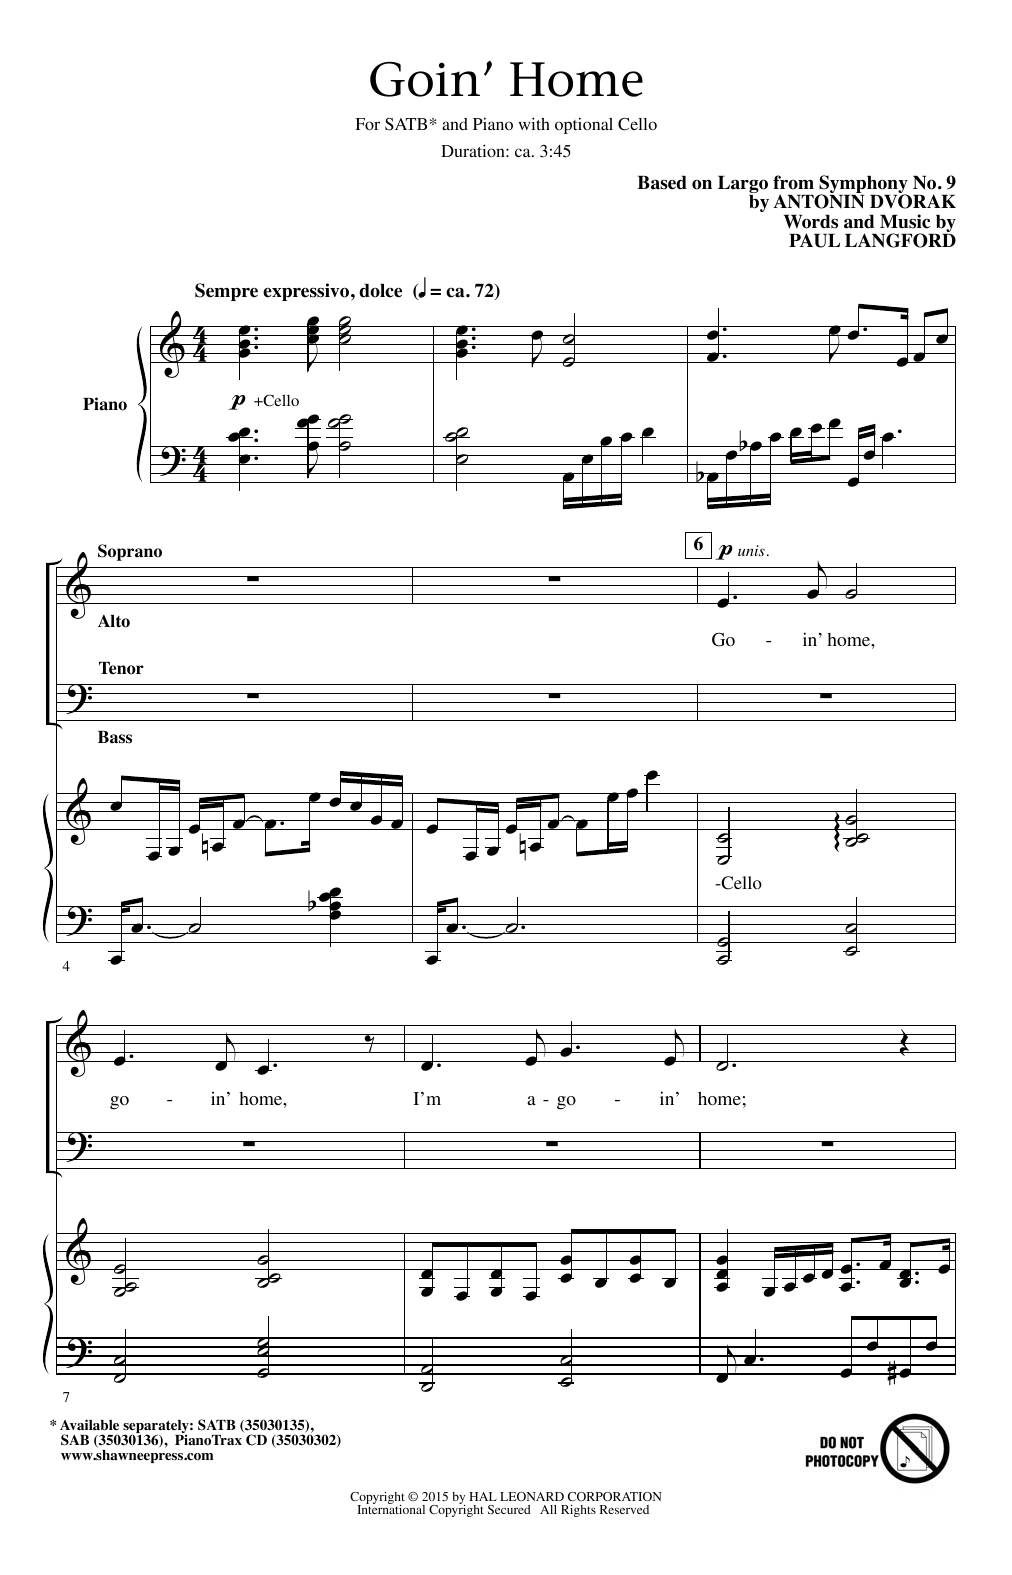 Paul Langford Goin' Home sheet music notes and chords arranged for SATB Choir